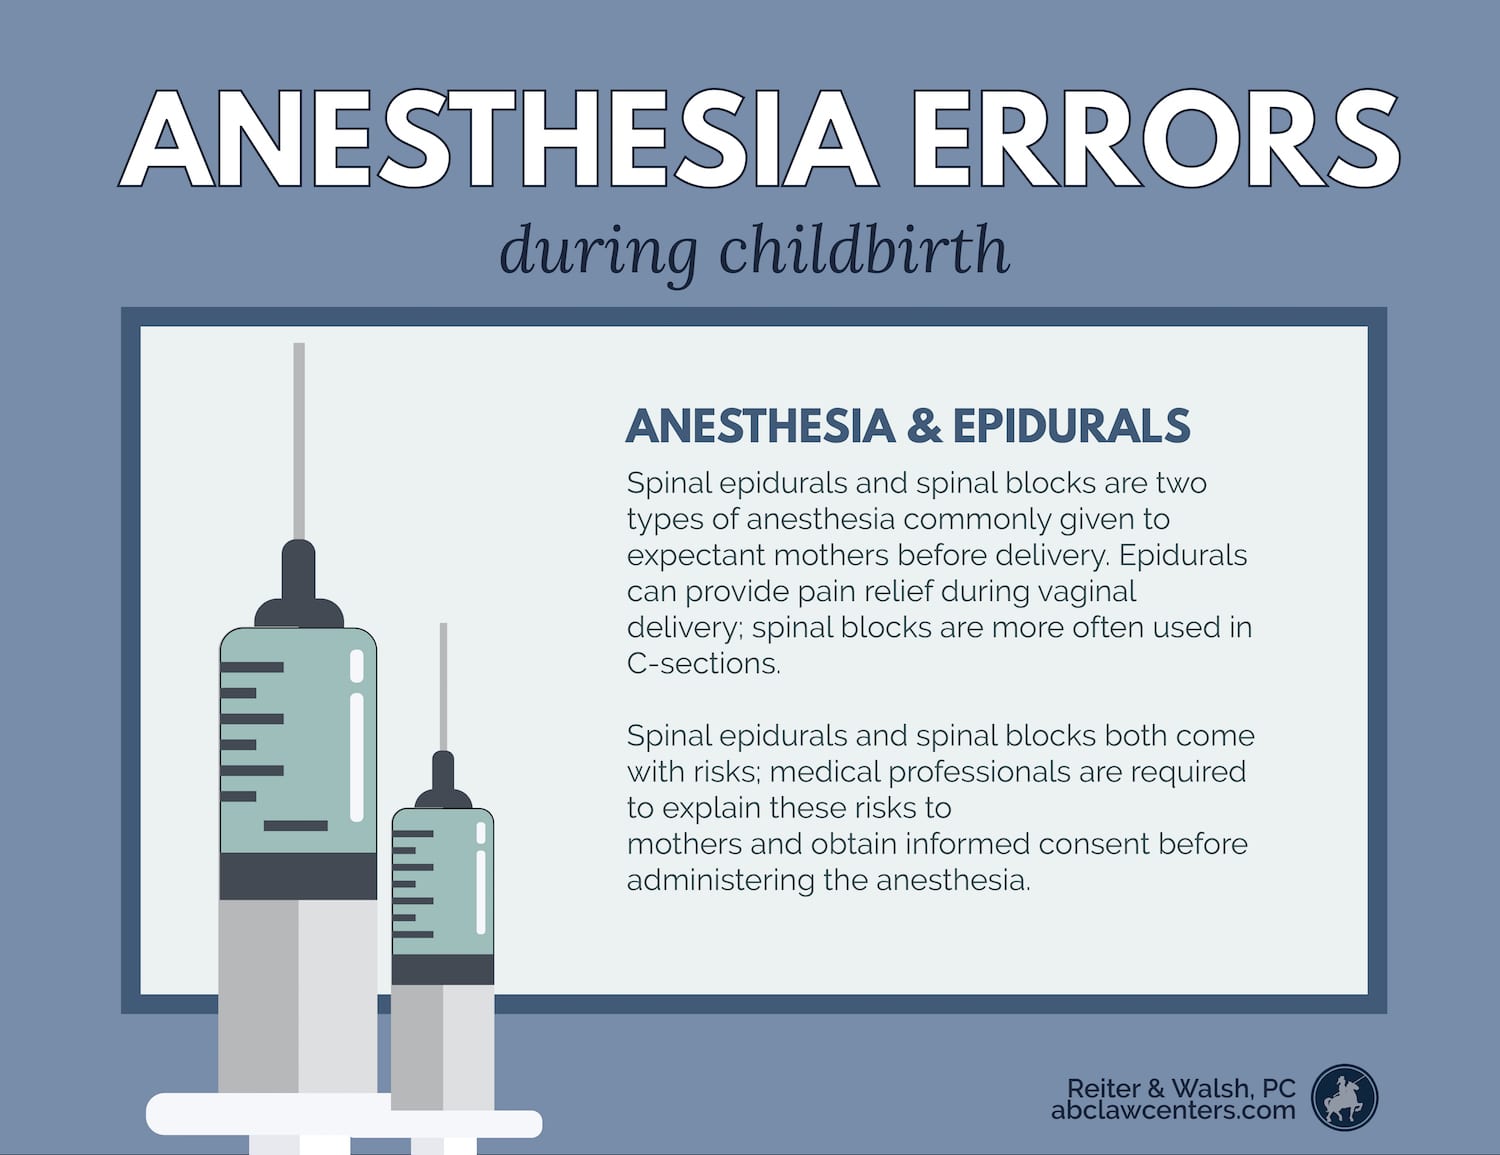 Anesthesia Errors During Childbirth - Epidurals and Spinal Blocks